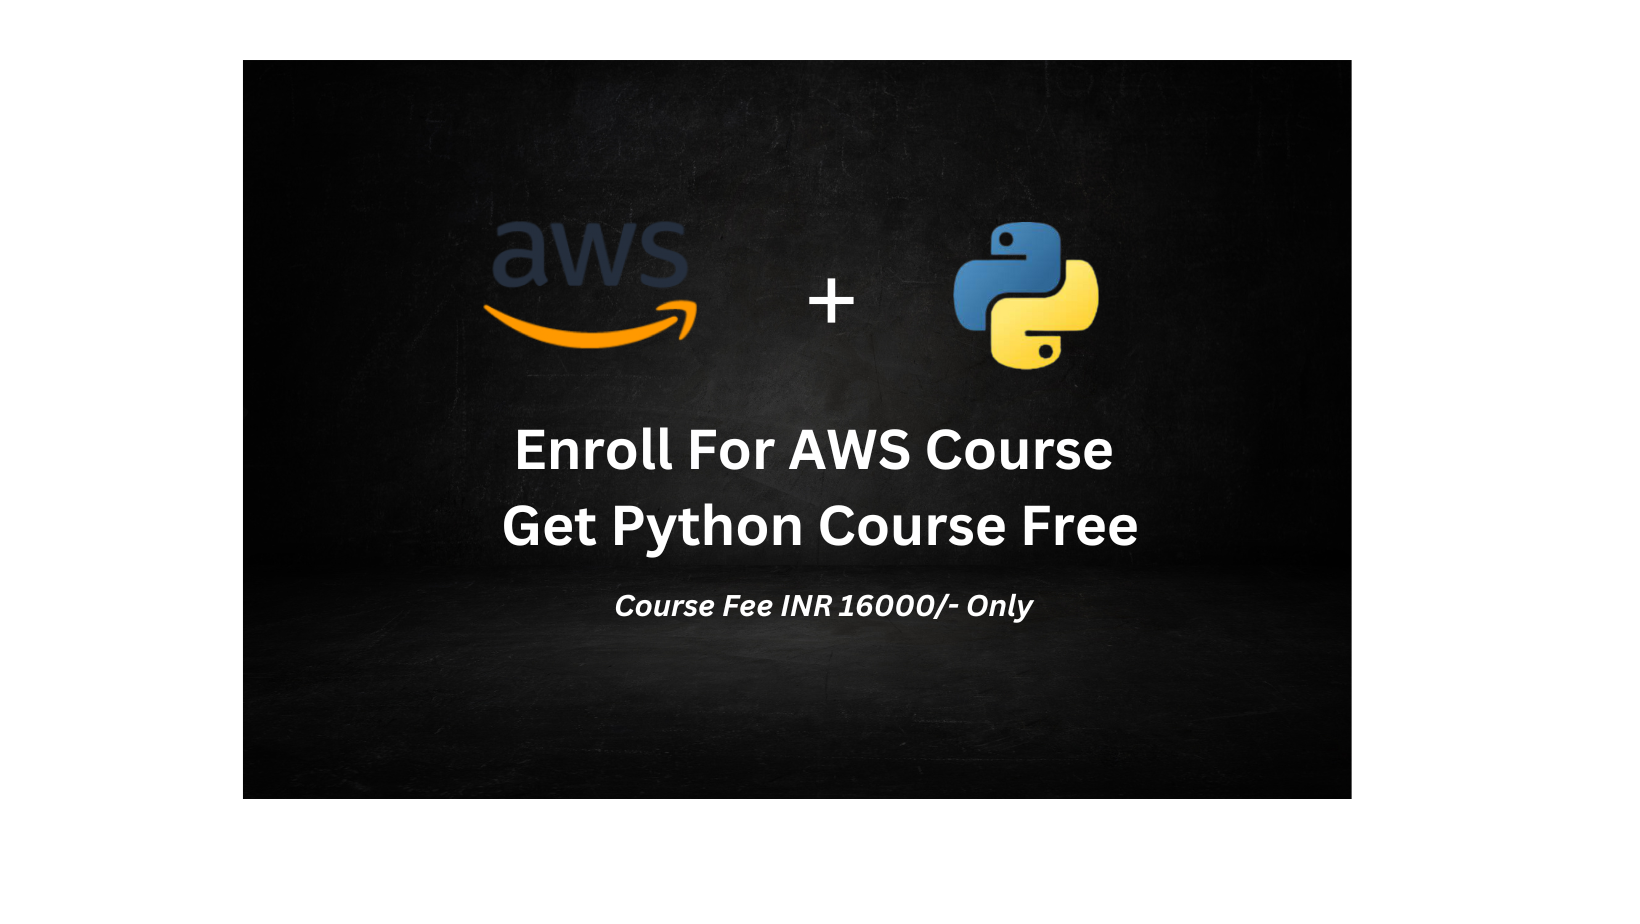 Buy 1 Course Get Python (1)